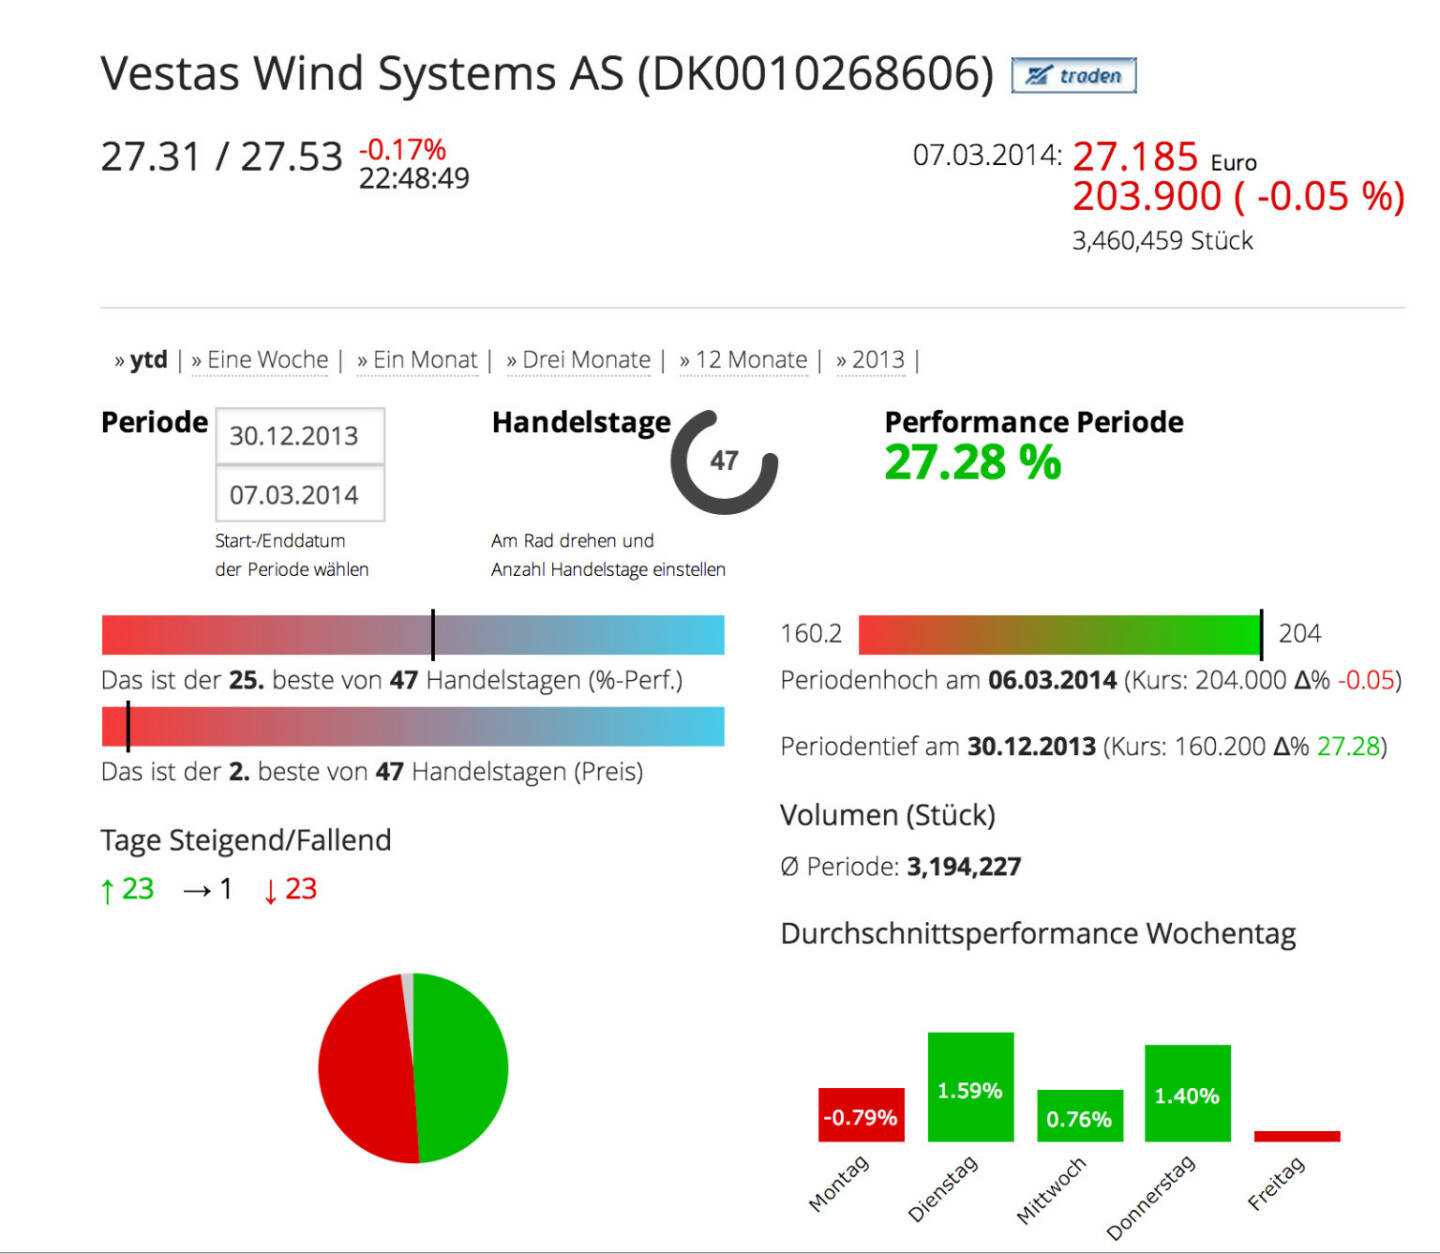 Vestas Wind Systems AS im Börse Social Network, http://boerse-social.com/launch/aktie/vestas_wind_systems_as